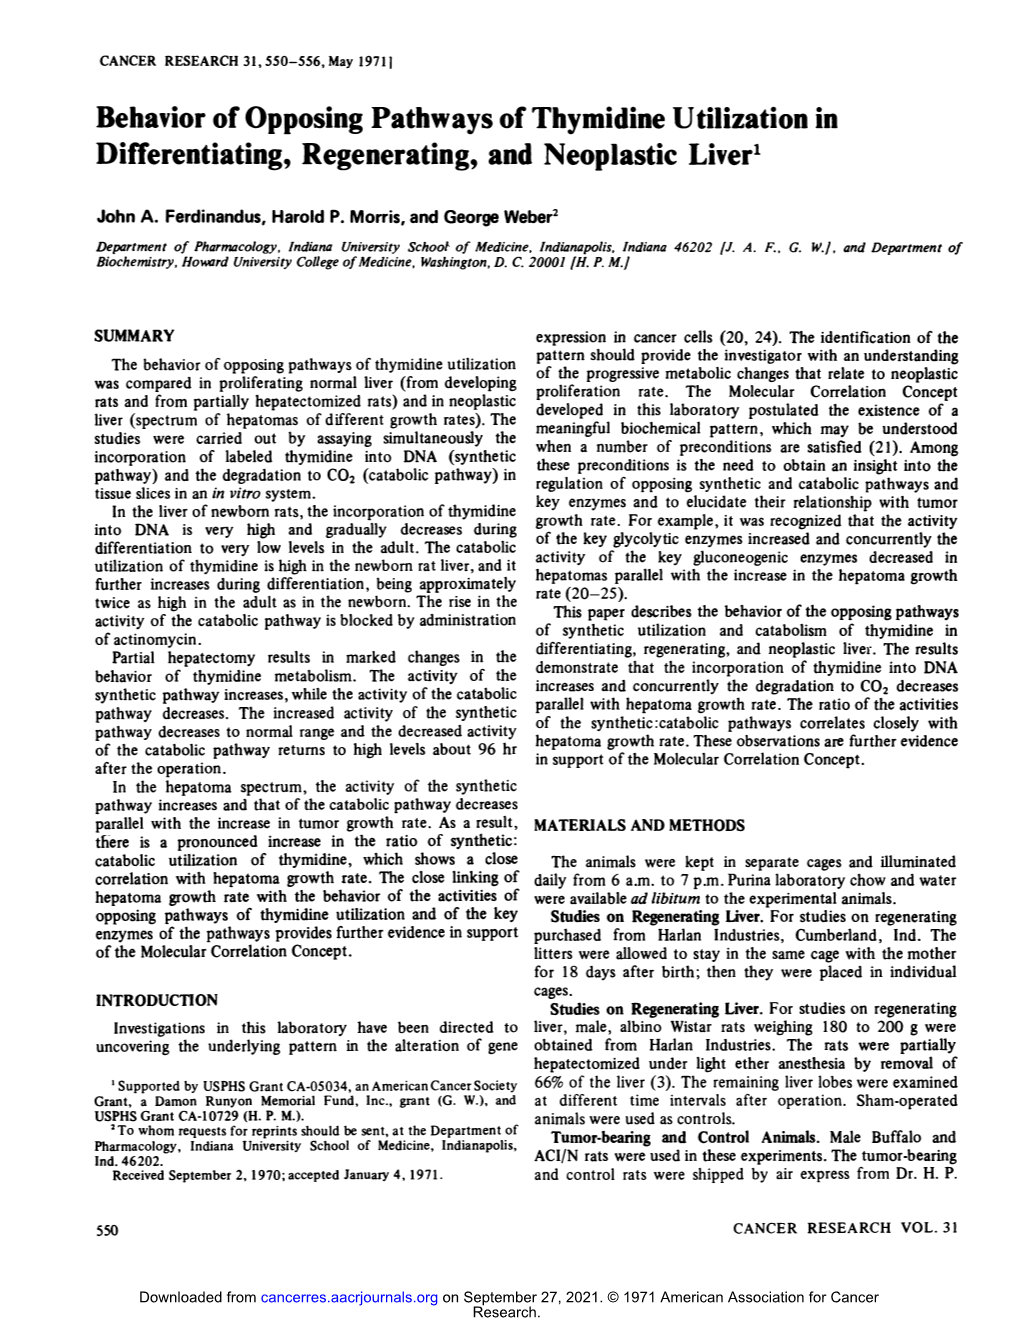 Behavior of Opposing Pathways of Thymidine Utilization in Differentiating, Regenerating, and Neoplastic Liver1